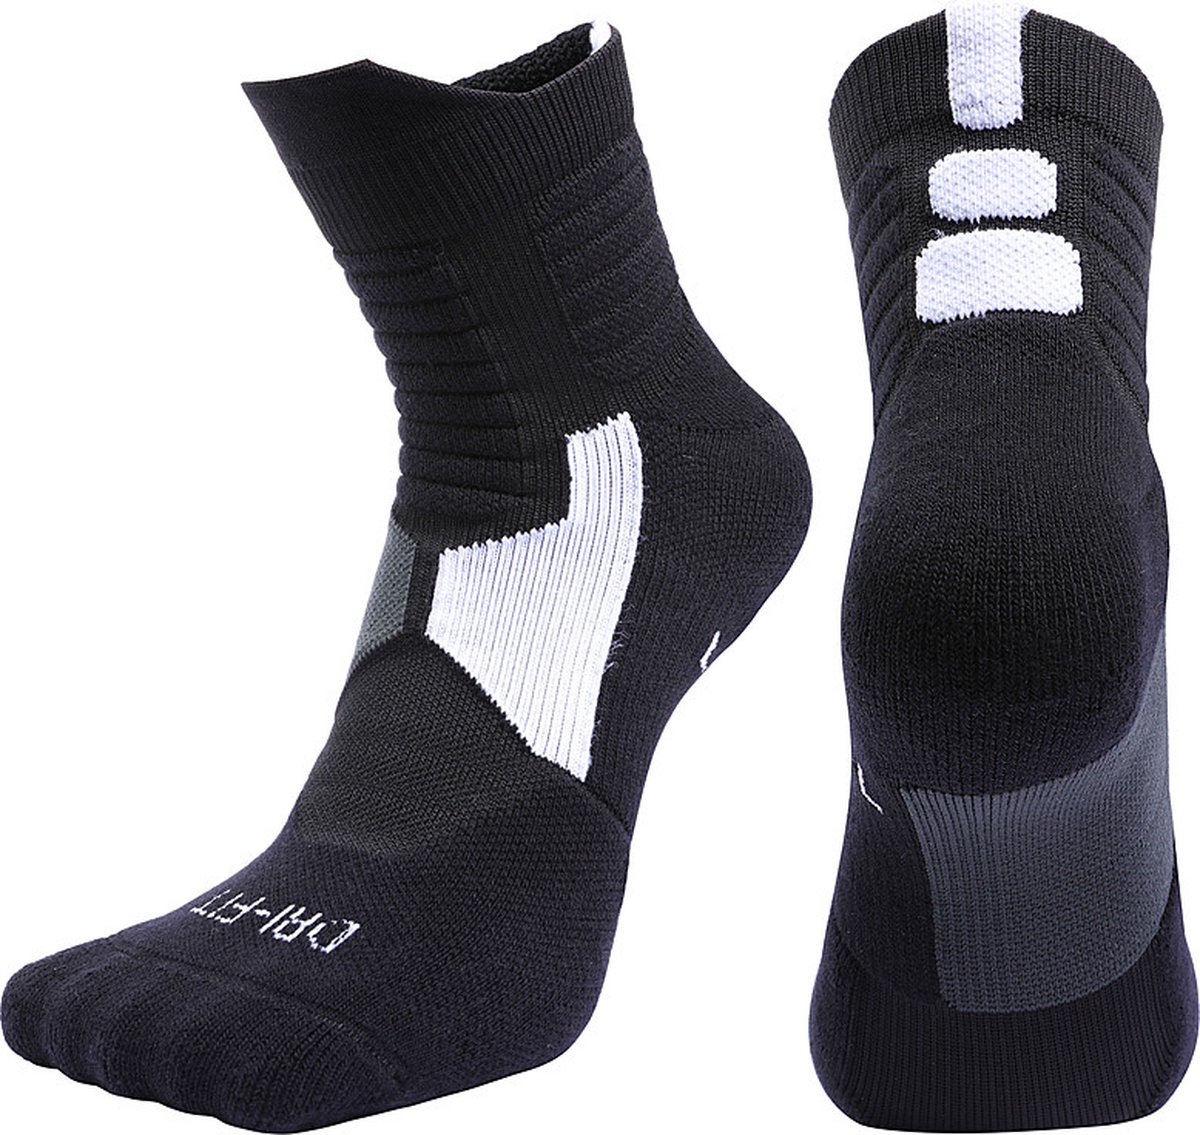 UPSOCKS® Sportsokken - Multifunctionele sportsokken - Zwart & Wit - L/XL - stevige en comfortabele sokken - ideaal voor verschillende sporten - tennis - hardlopen - handbal - sporten - fitness